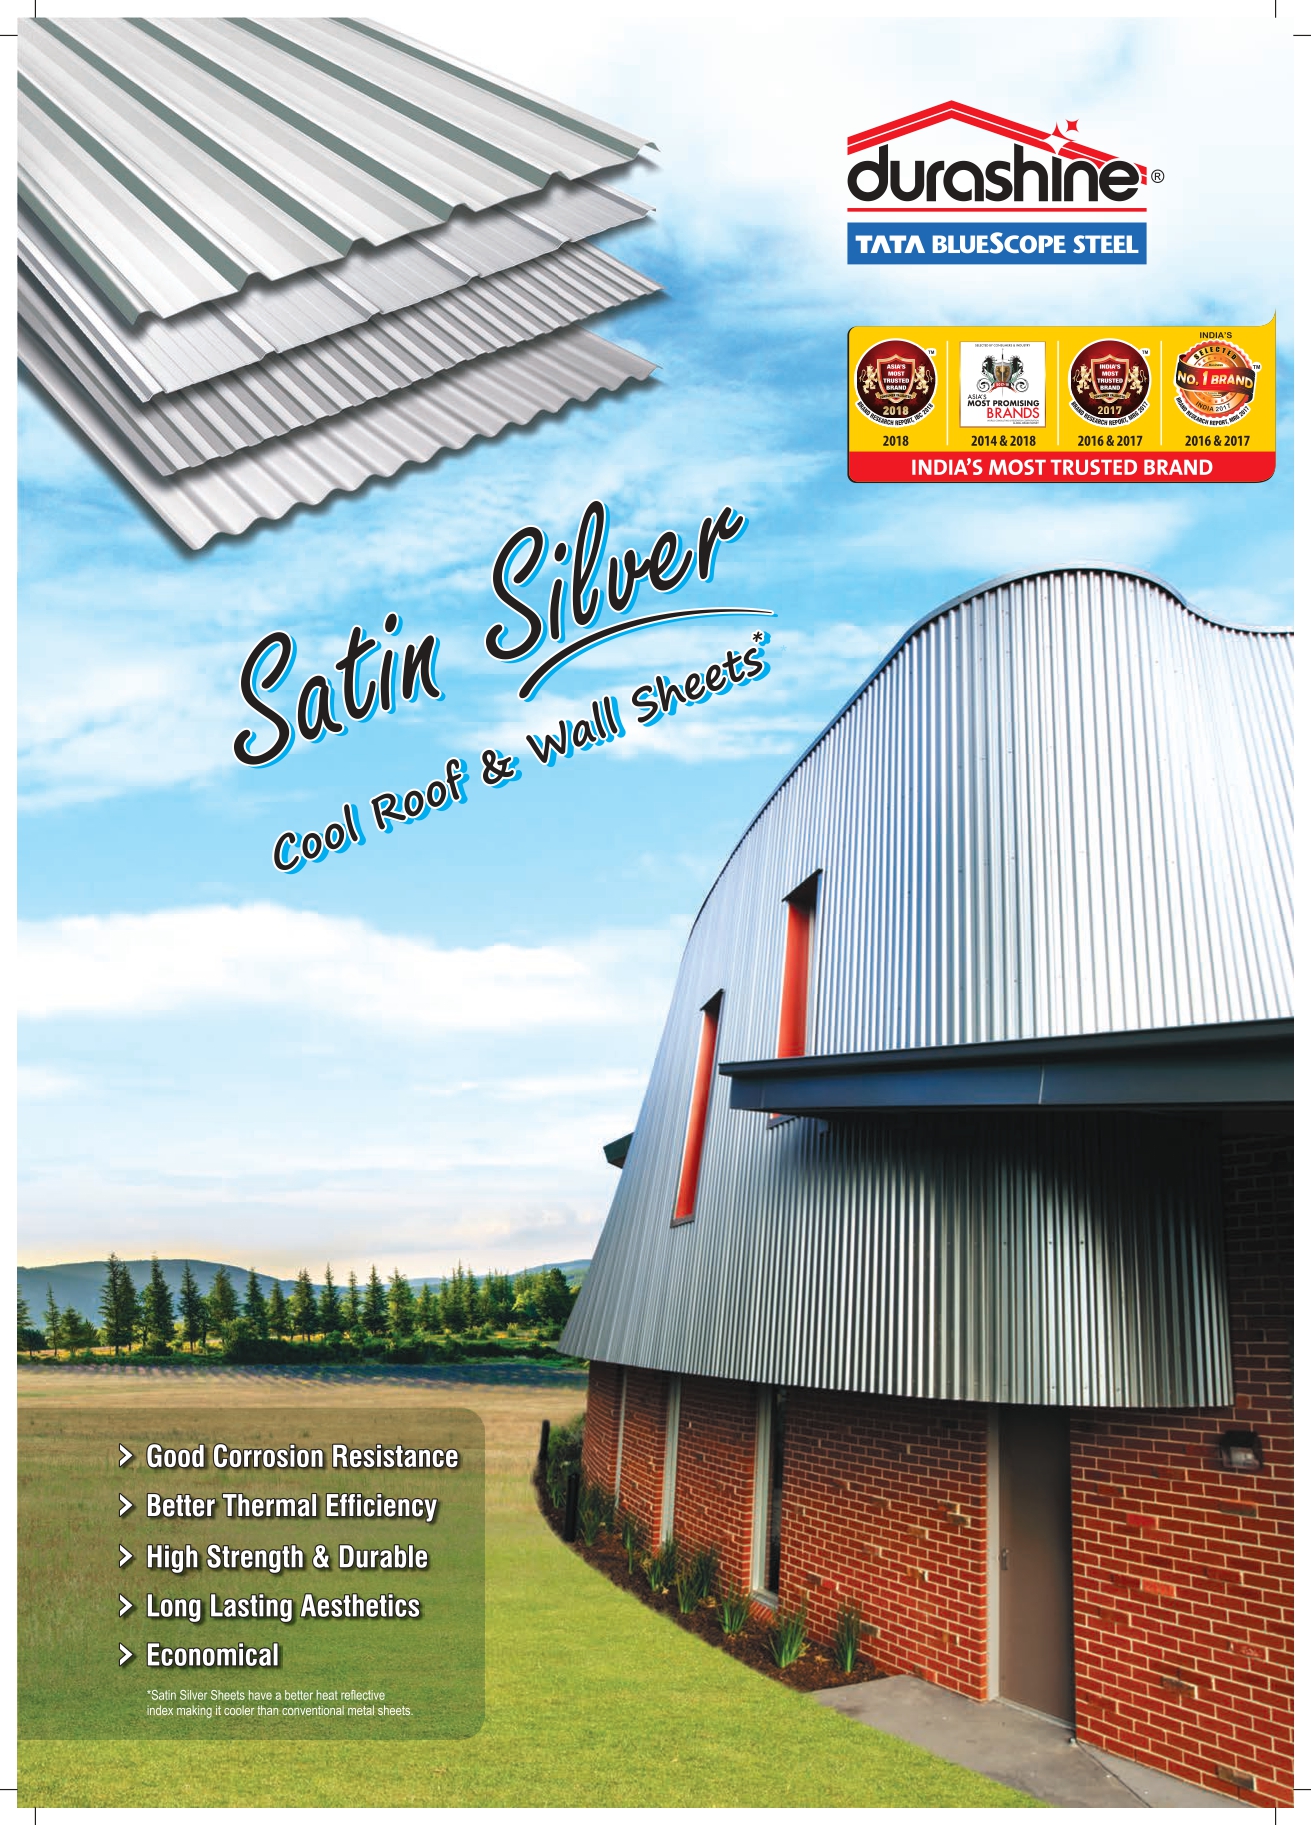 DURASHINE® - Satin Silver - Cool Roof and Wall Sheets